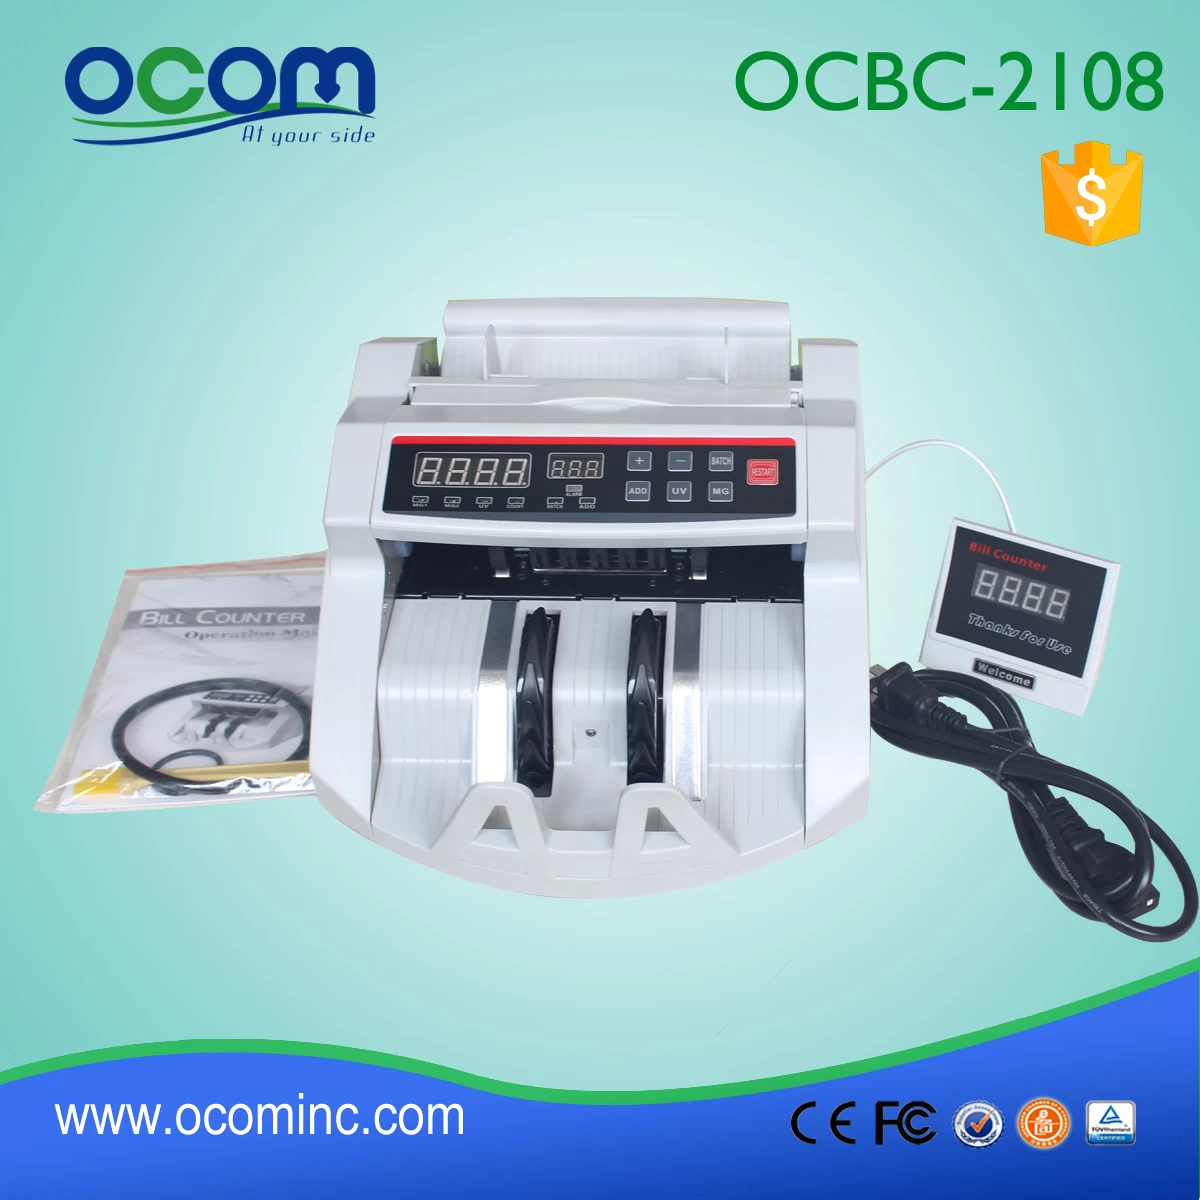 (OCBC-2108)--OCOM 2016 newest bill counter machine